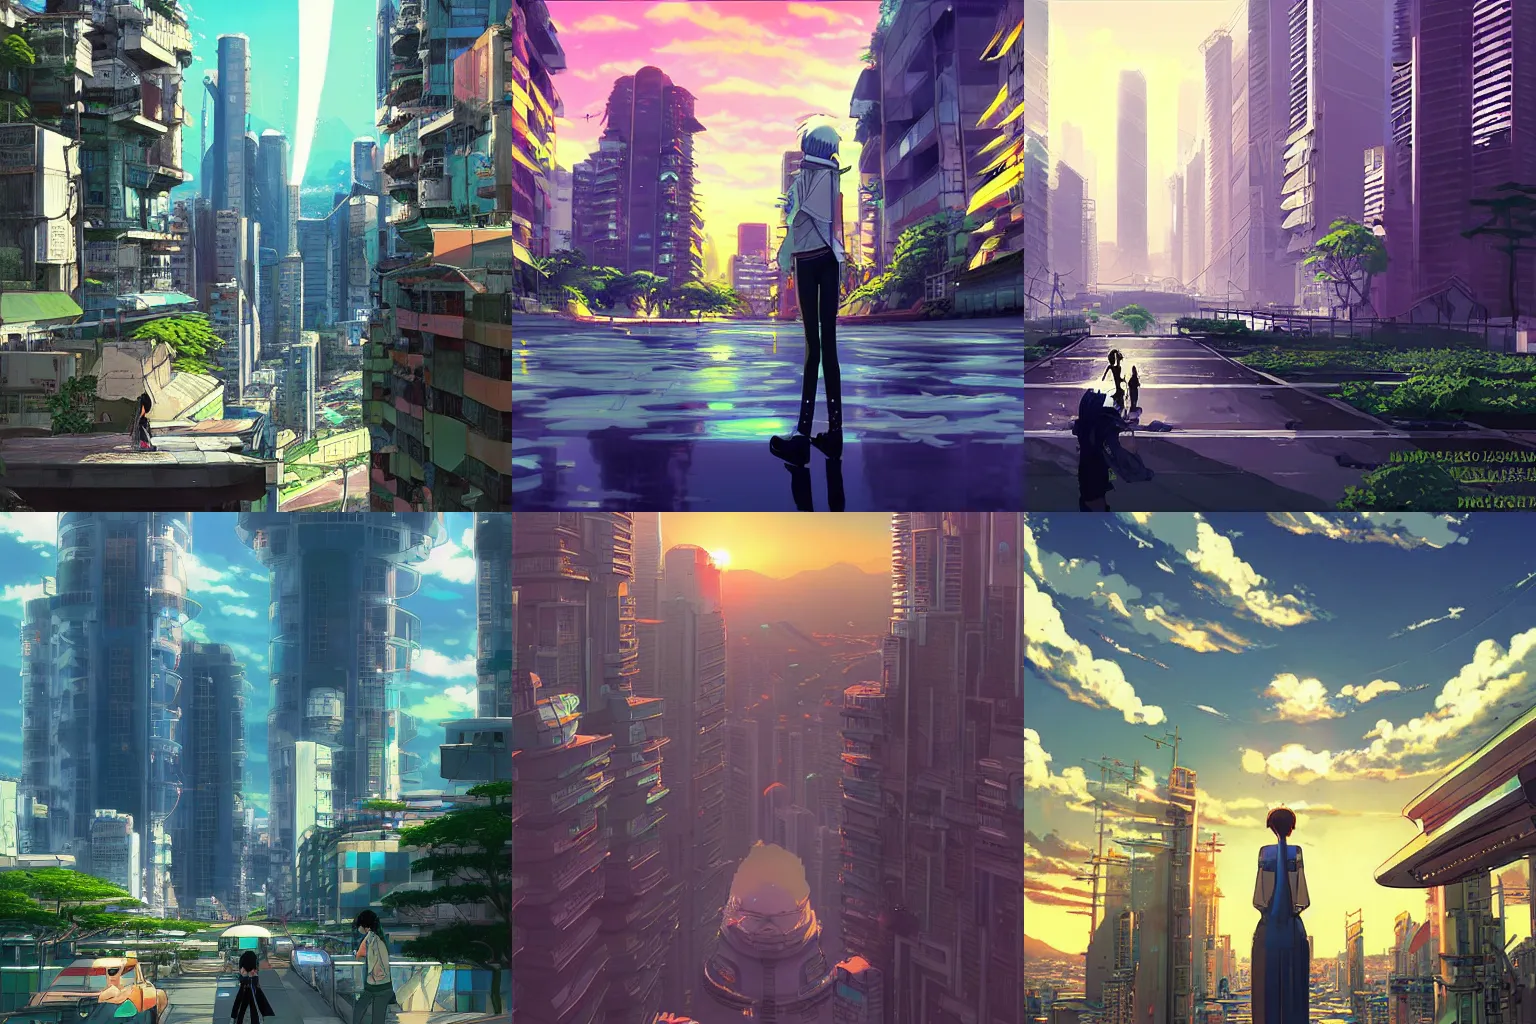 Prompt: Anime Solarpunk futuristic Rio de Janeiro by makoto shinkai